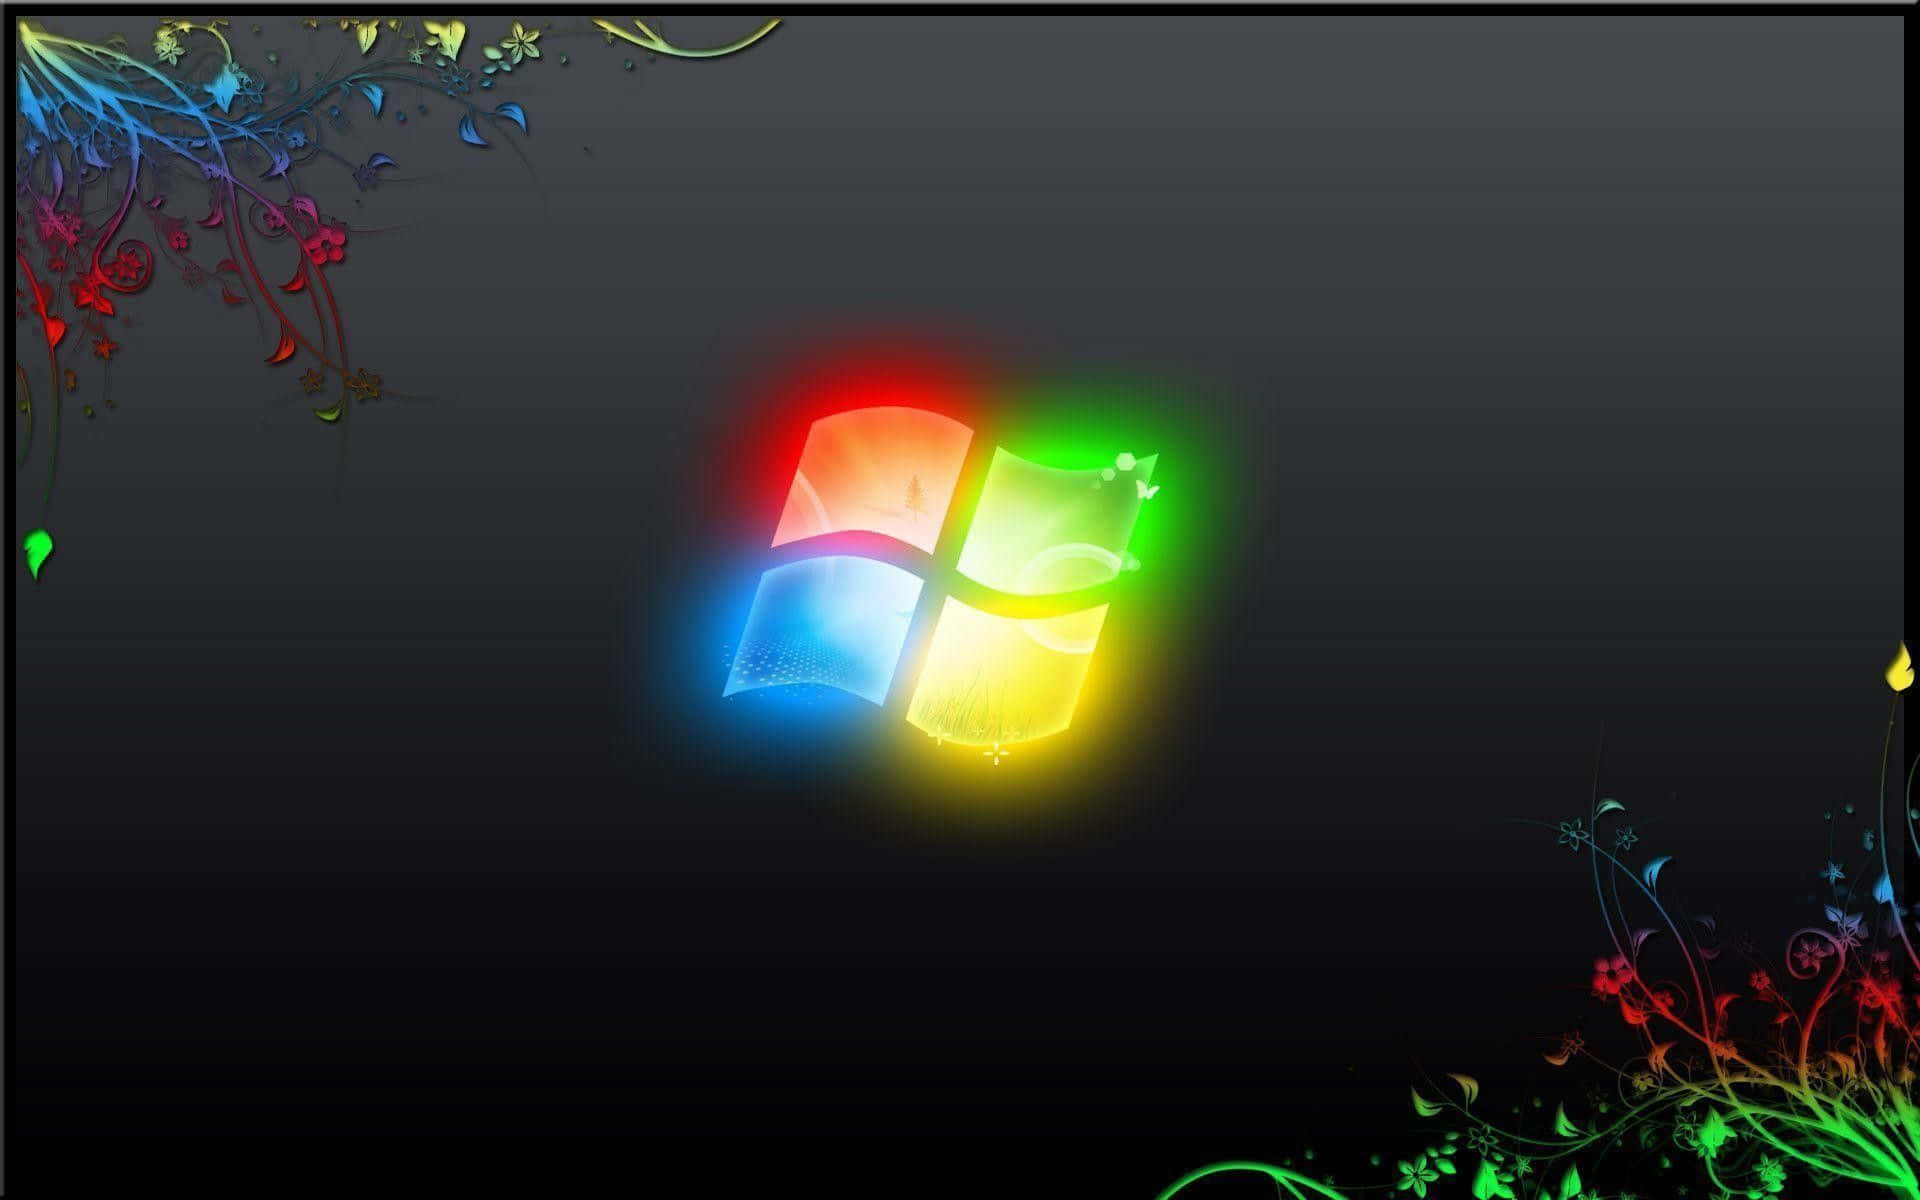 Windows7 Bakgrundsbilder I Hd